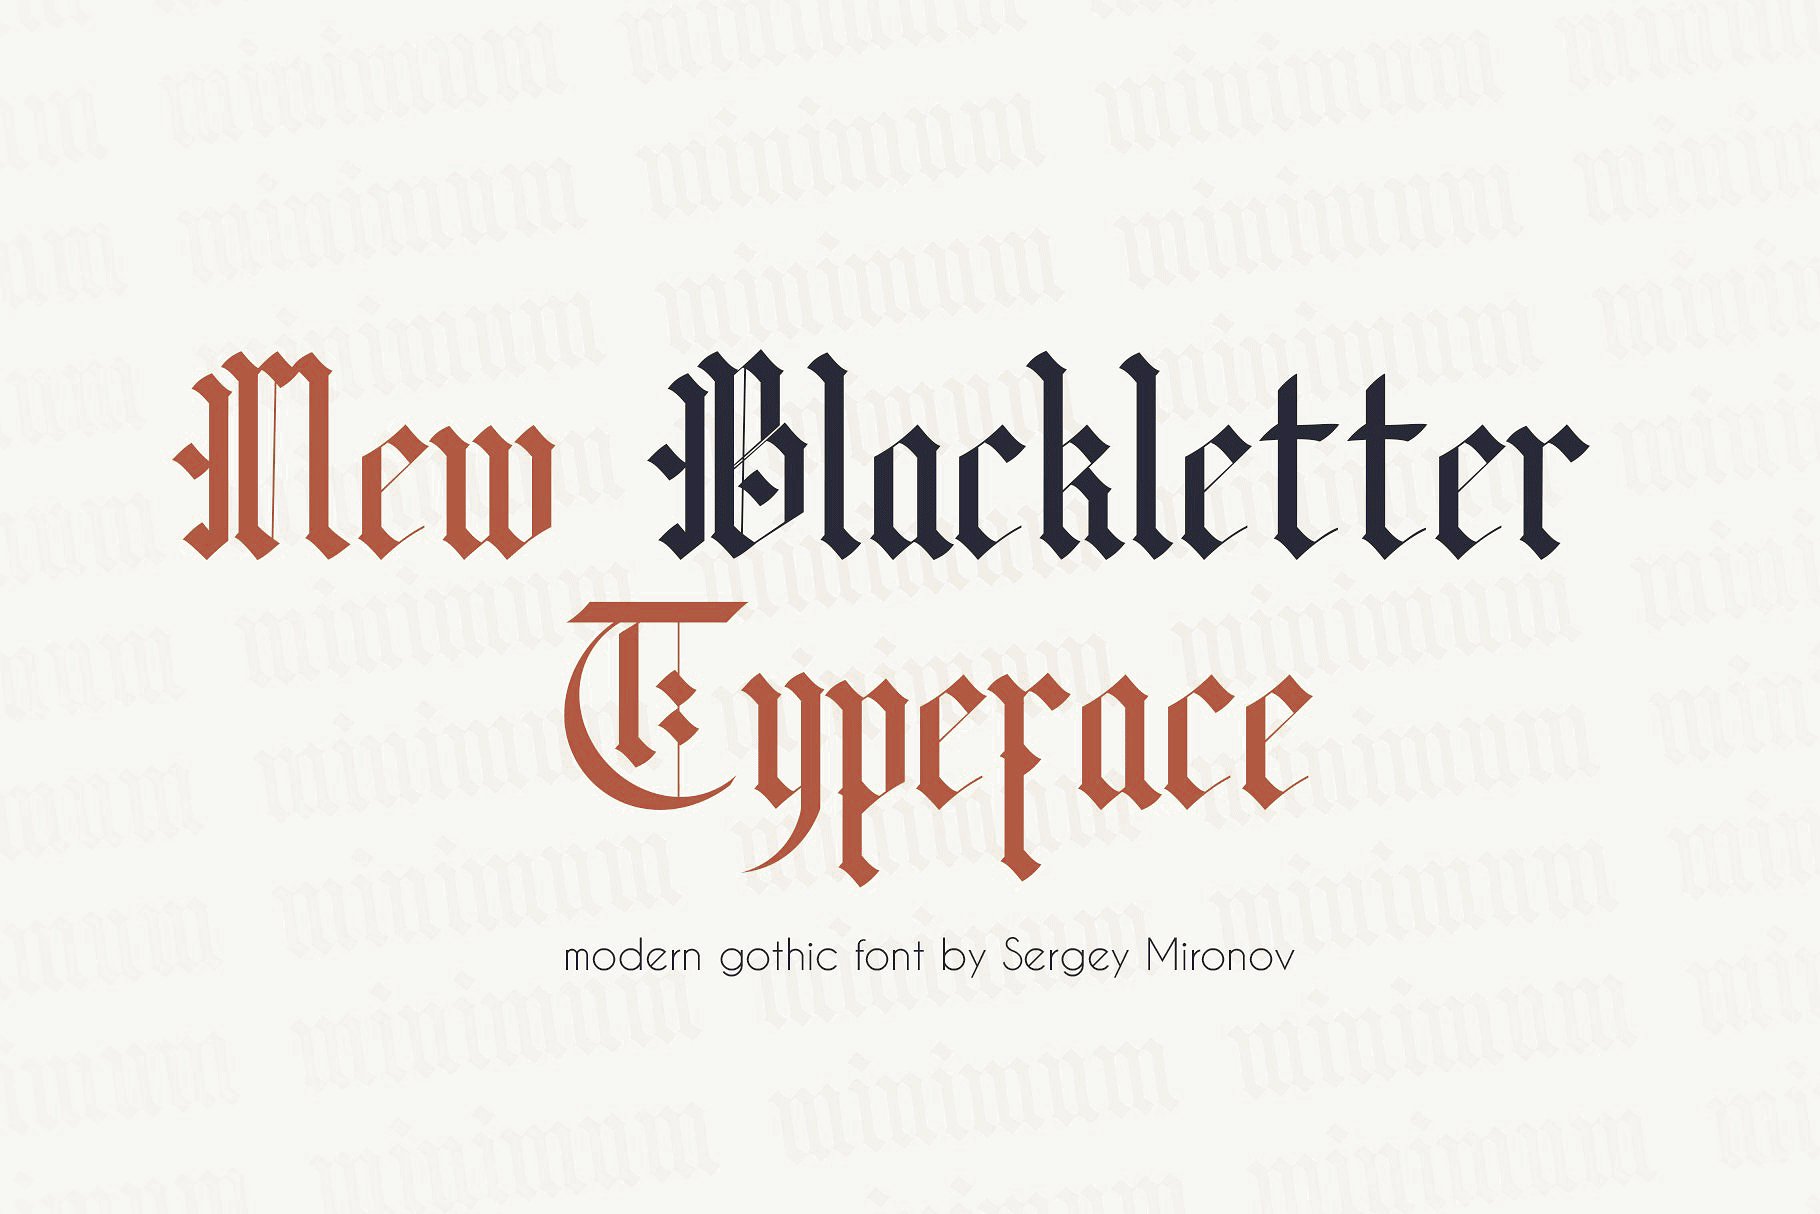 New Blackletter Typeface font. cover image.